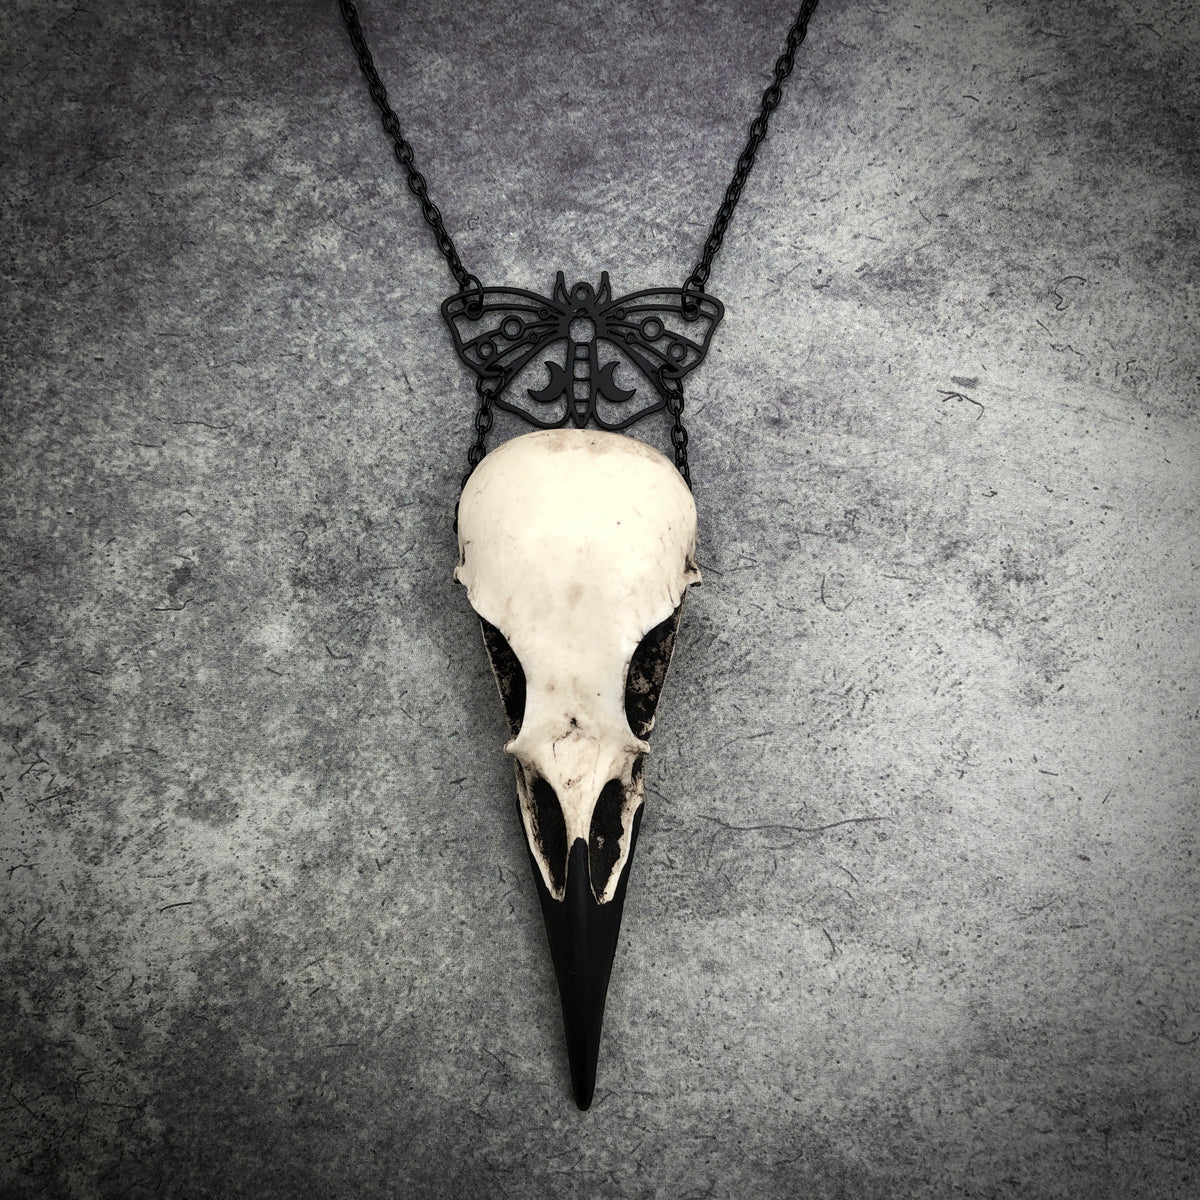 Witchy pagan black death moth luna butterfly charm pendant and bone jewelry mini raven skull dangle pendant by artist making resin bird skulls.